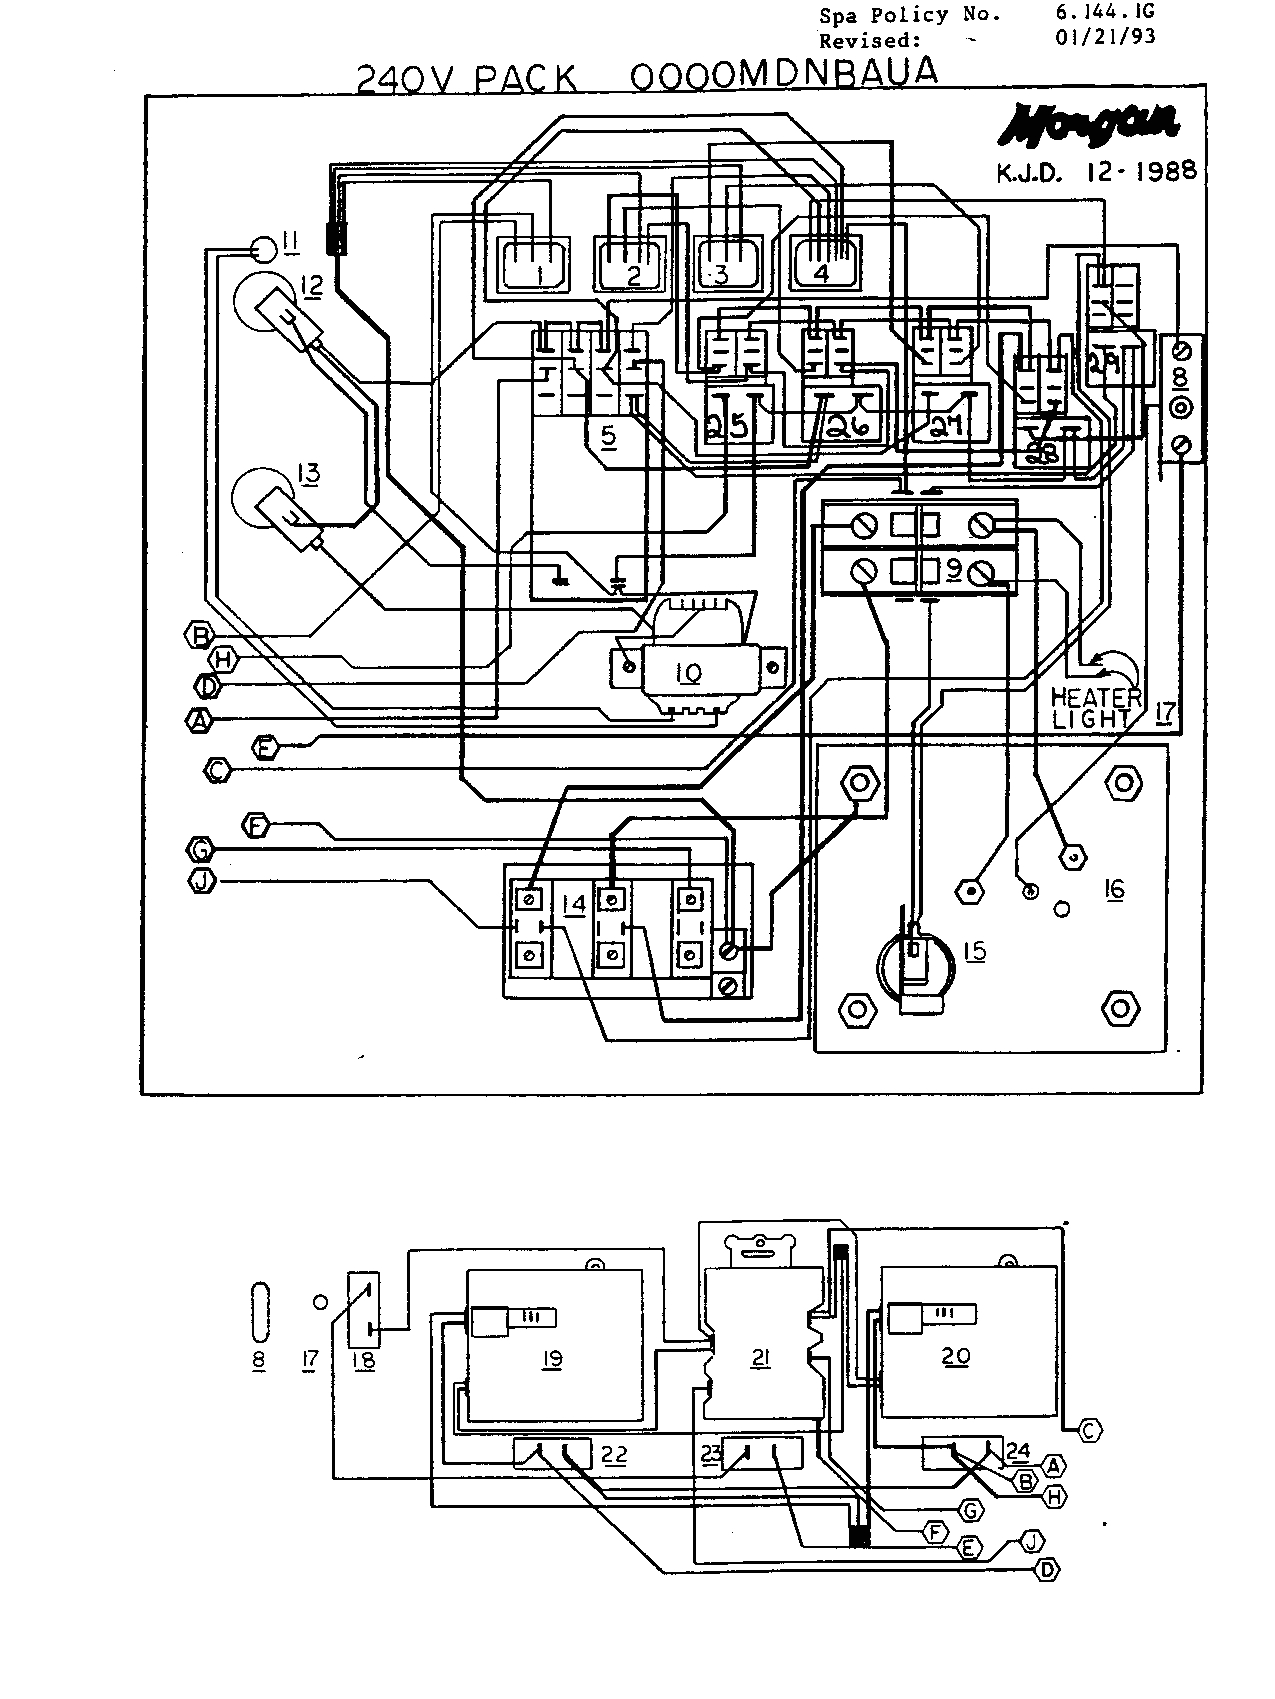 cal spa wiring diagram apktodownload a index of diagrams morgan